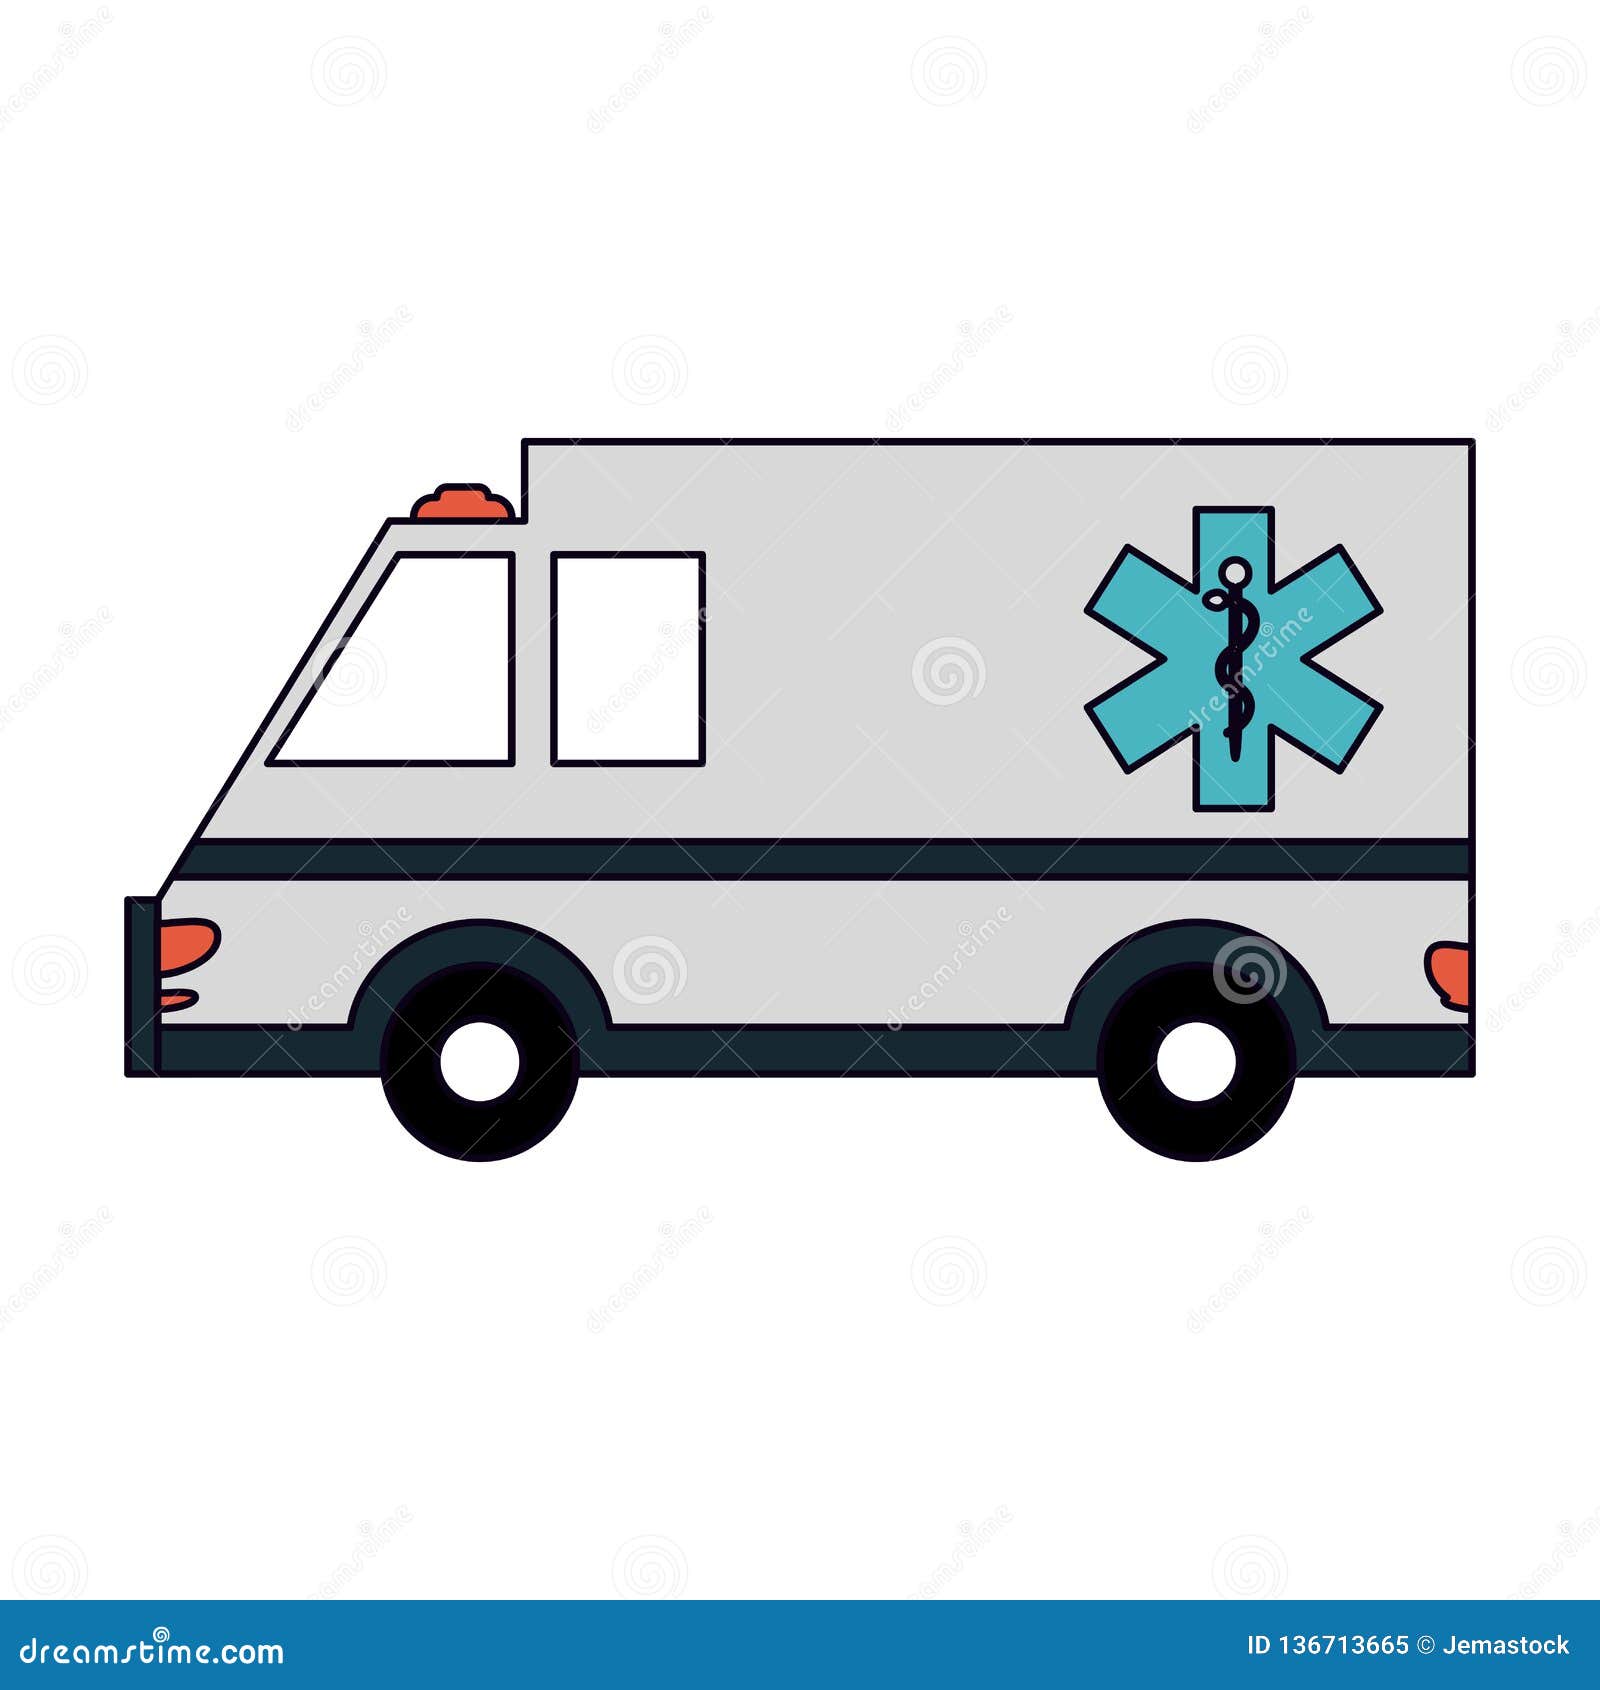 Ambulance medical vehicle stock vector. Illustration of healthcare ...